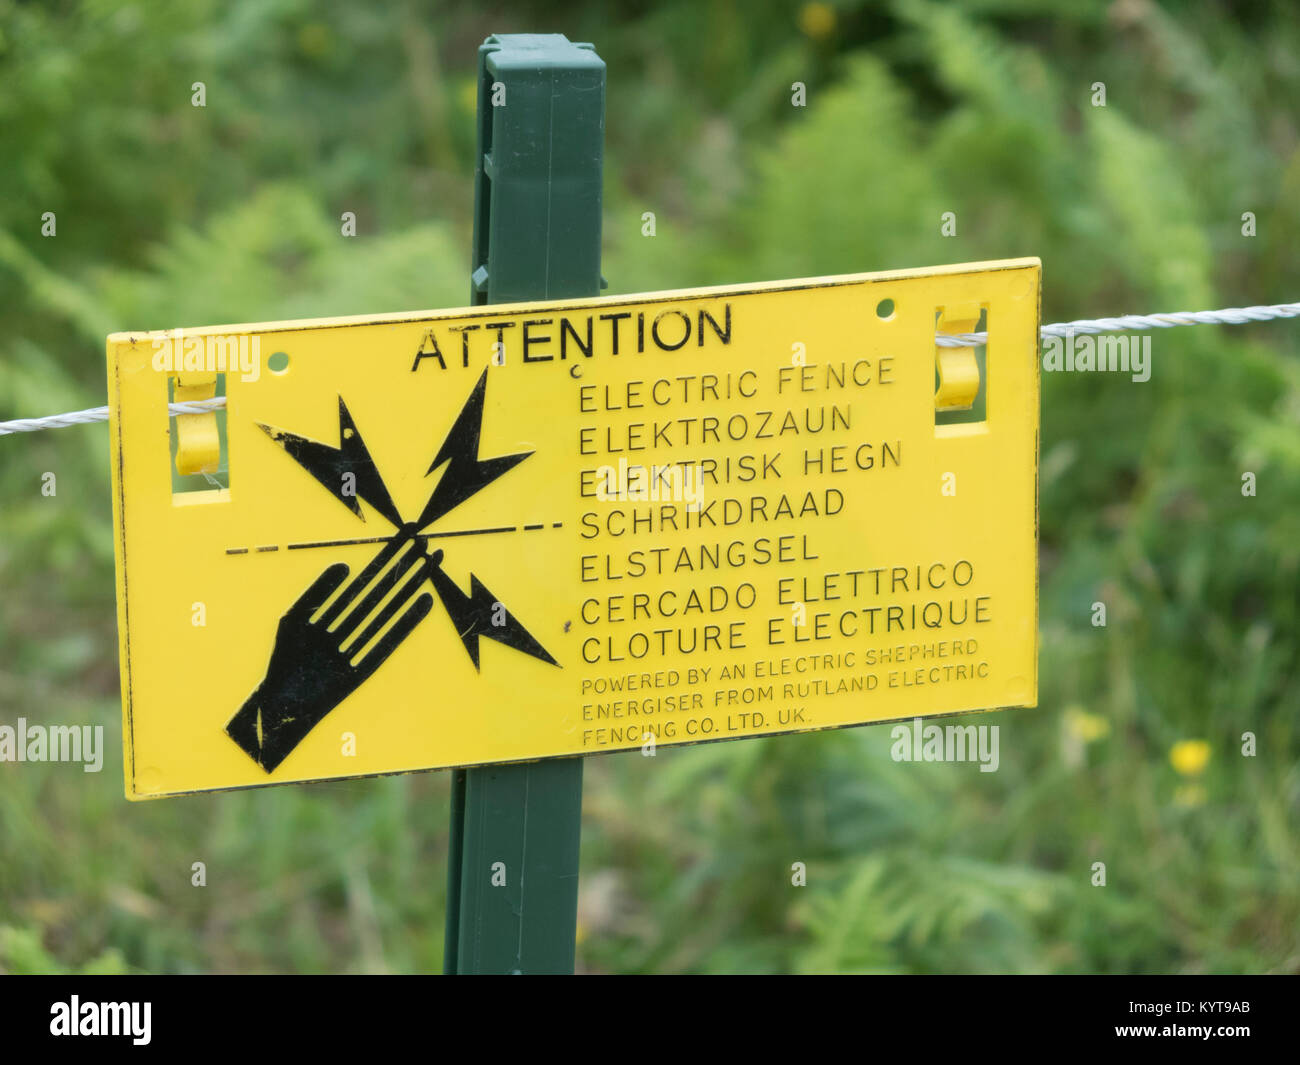 Warning Hazard Sign for Electric Livestock Fencing Warning Of Risk of Electric Shock, UK Stock Photo